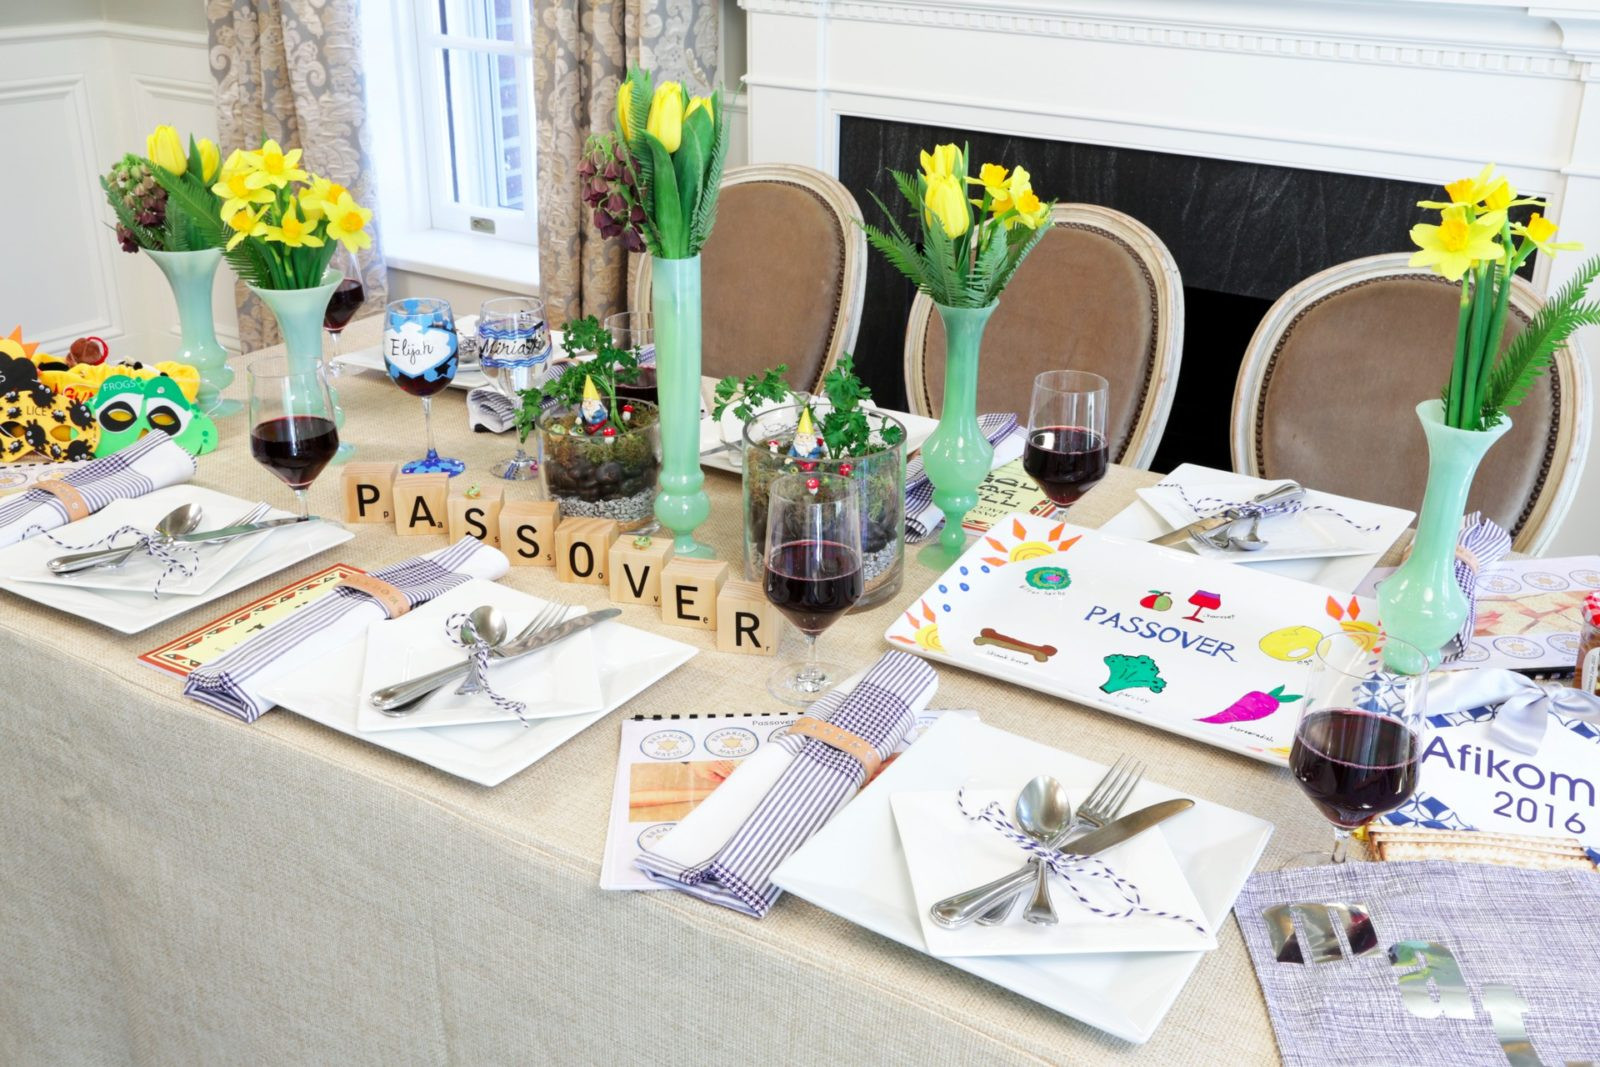 Passover Decoration Ideas
 The Fun Passover Table Breaking Matzo